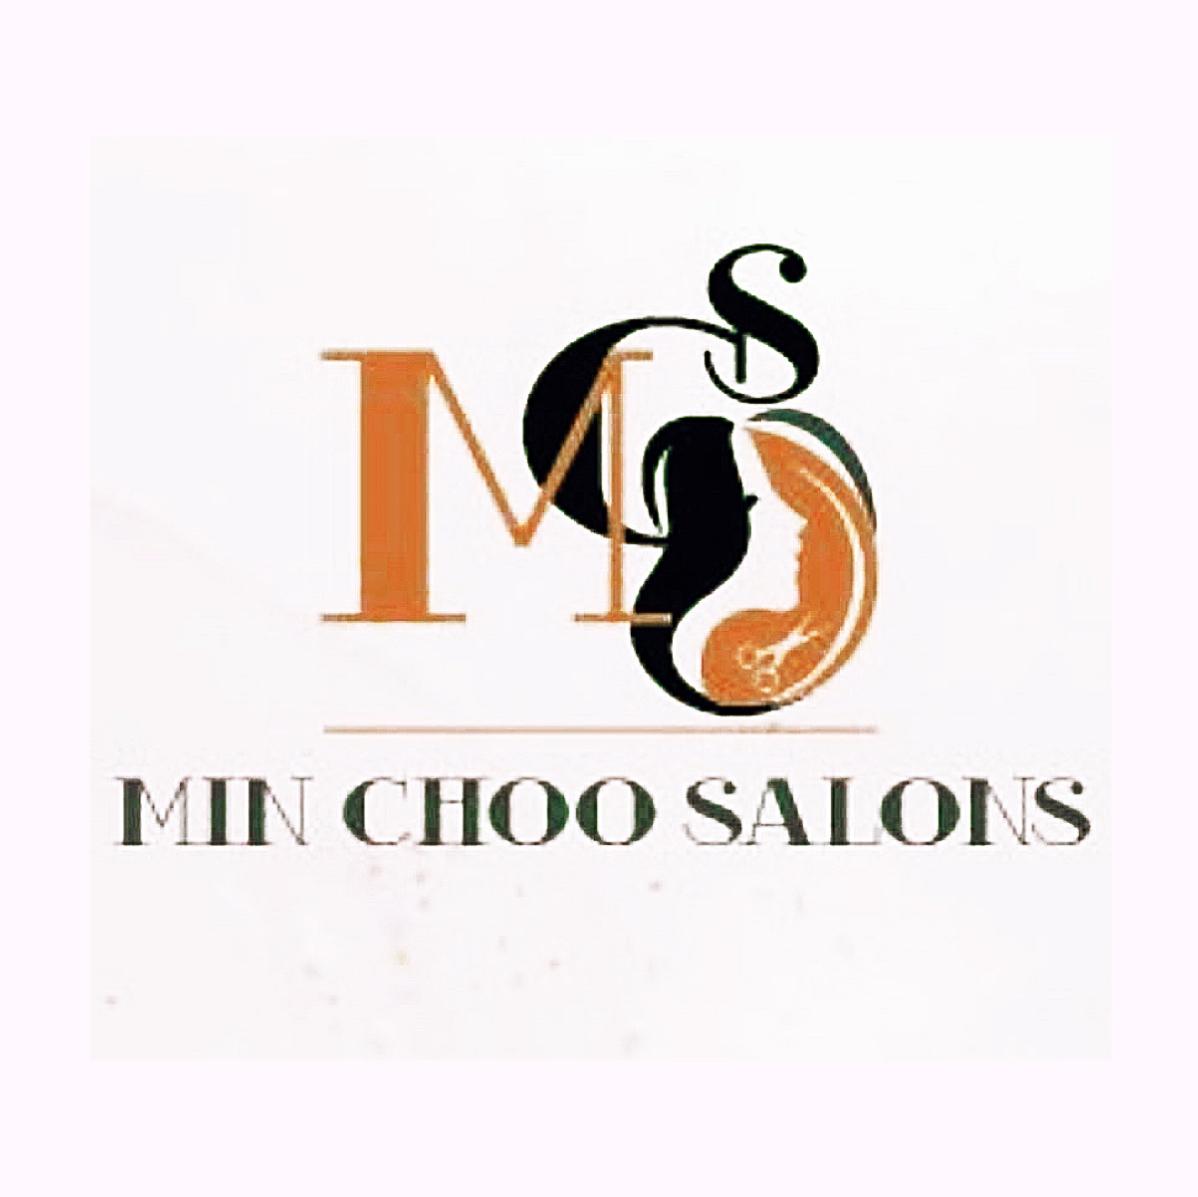 Min Choo Salons's images